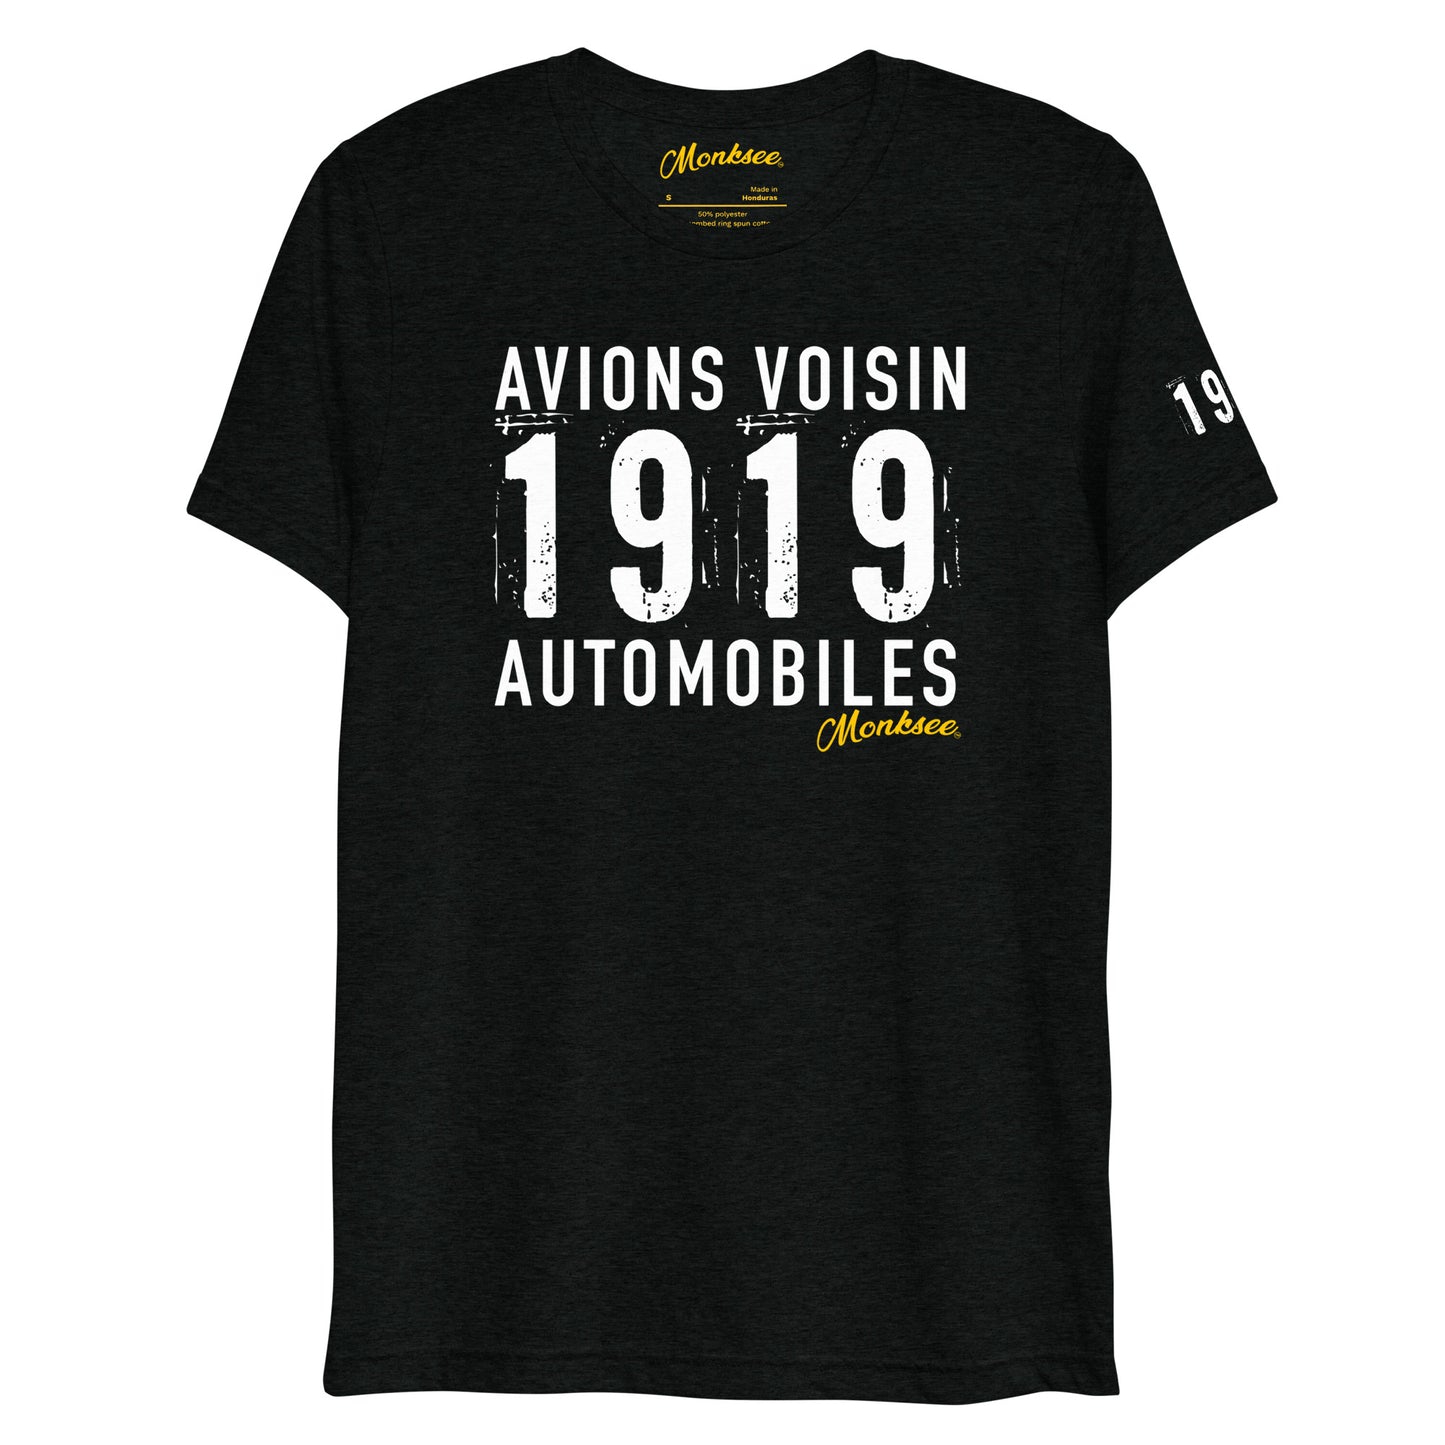 Avions Voisin Automobiles t-shirt.